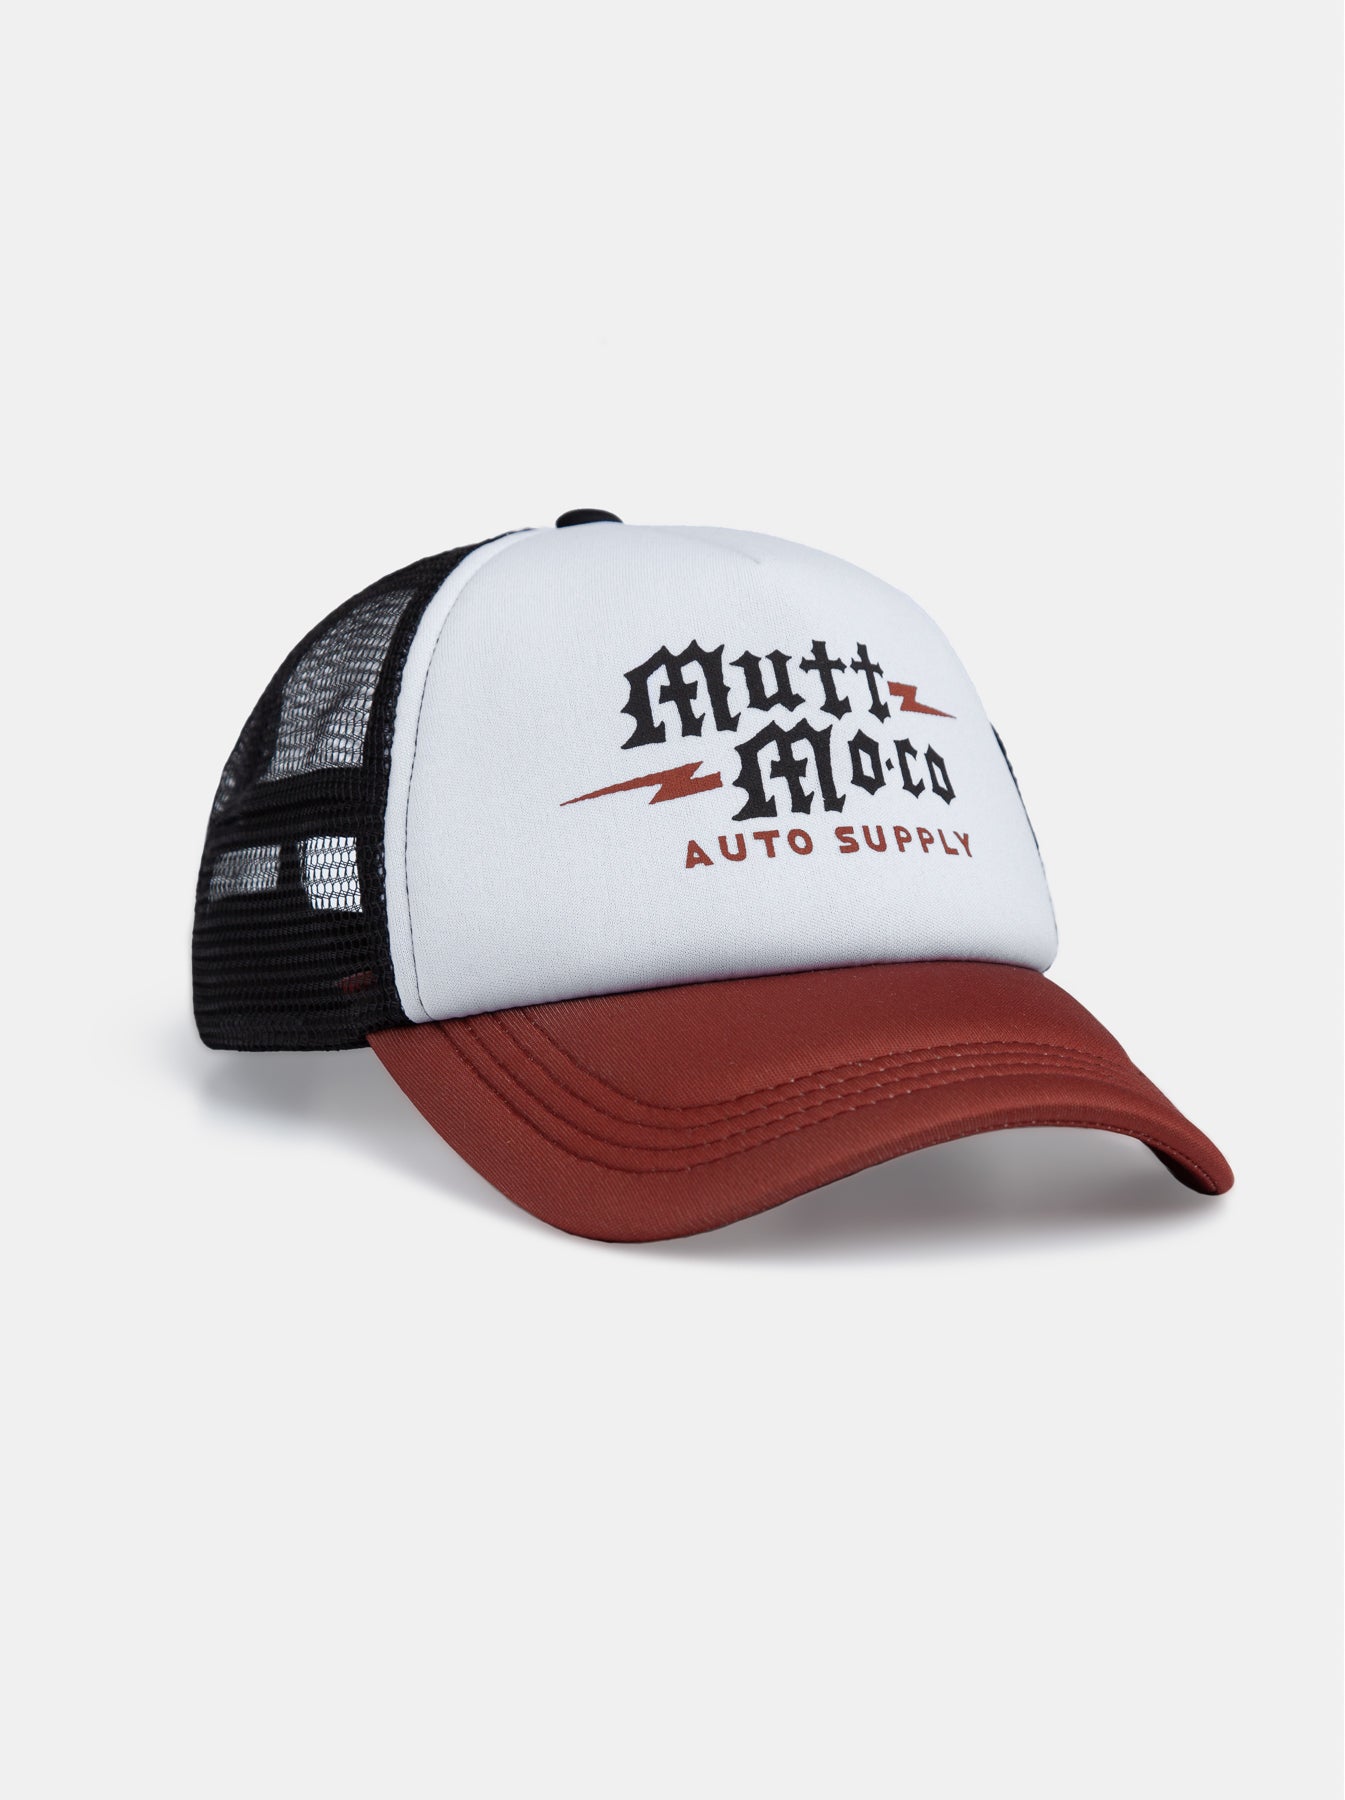 Mutt Auto Supply Trucker